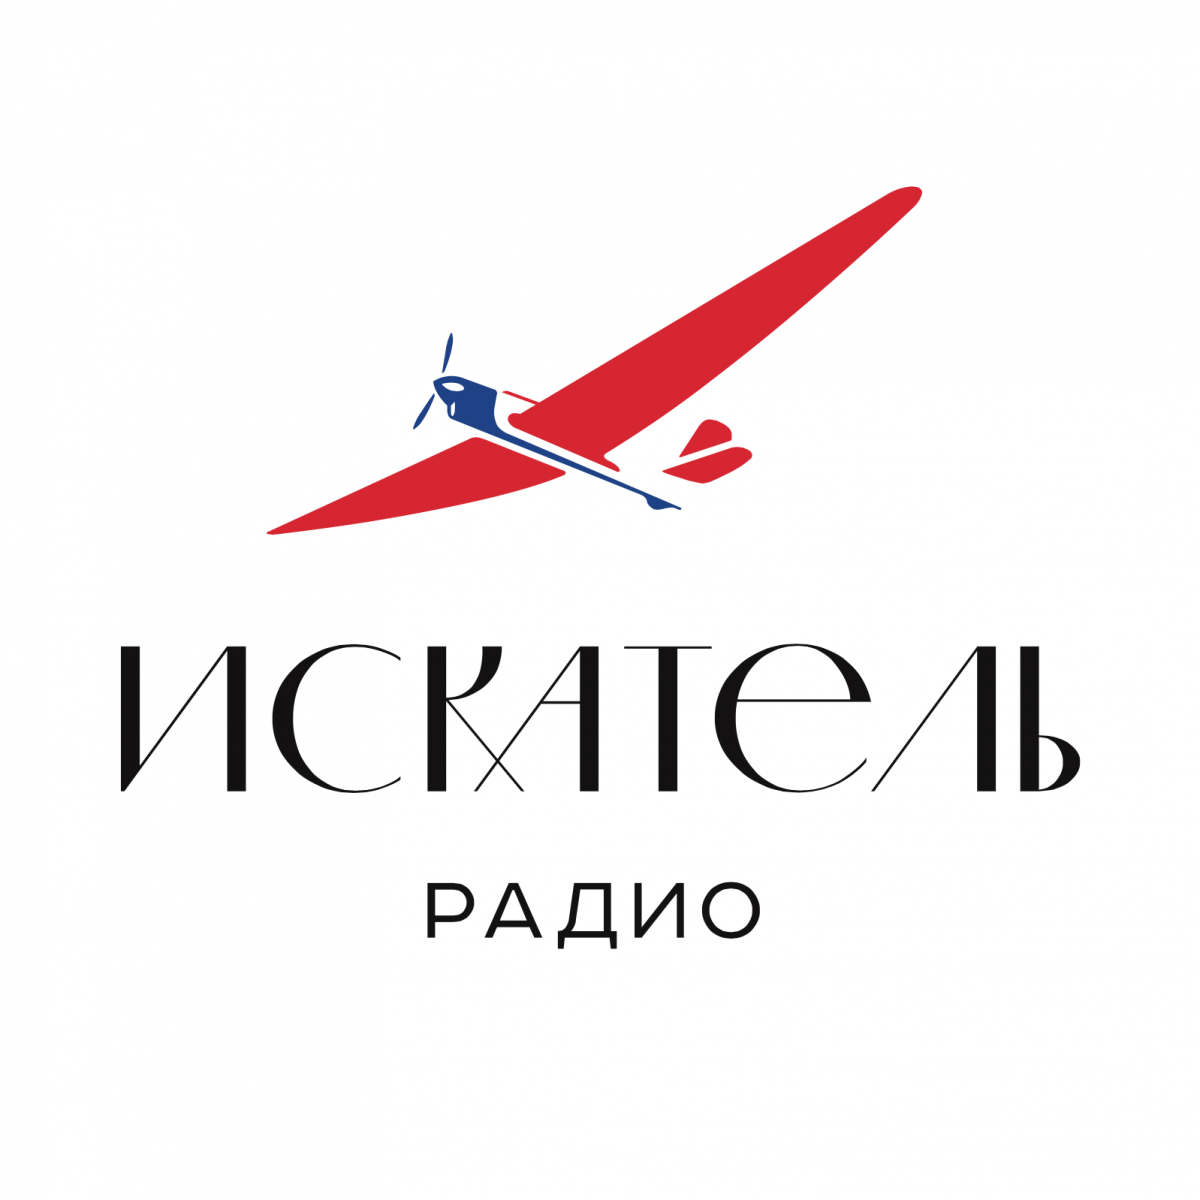 iskatel-logo-colors_1.png